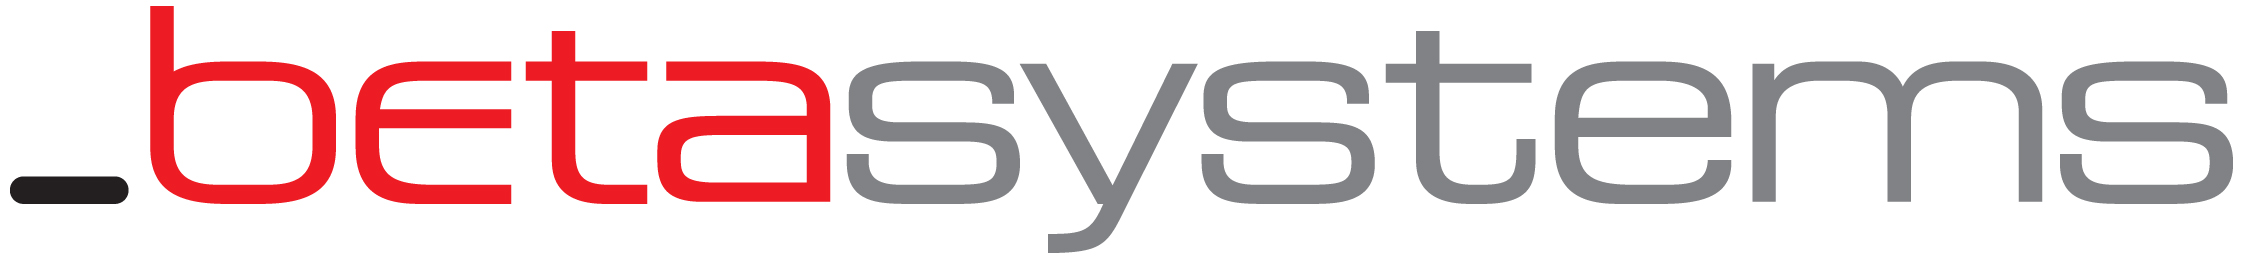 beta systems logo 2019